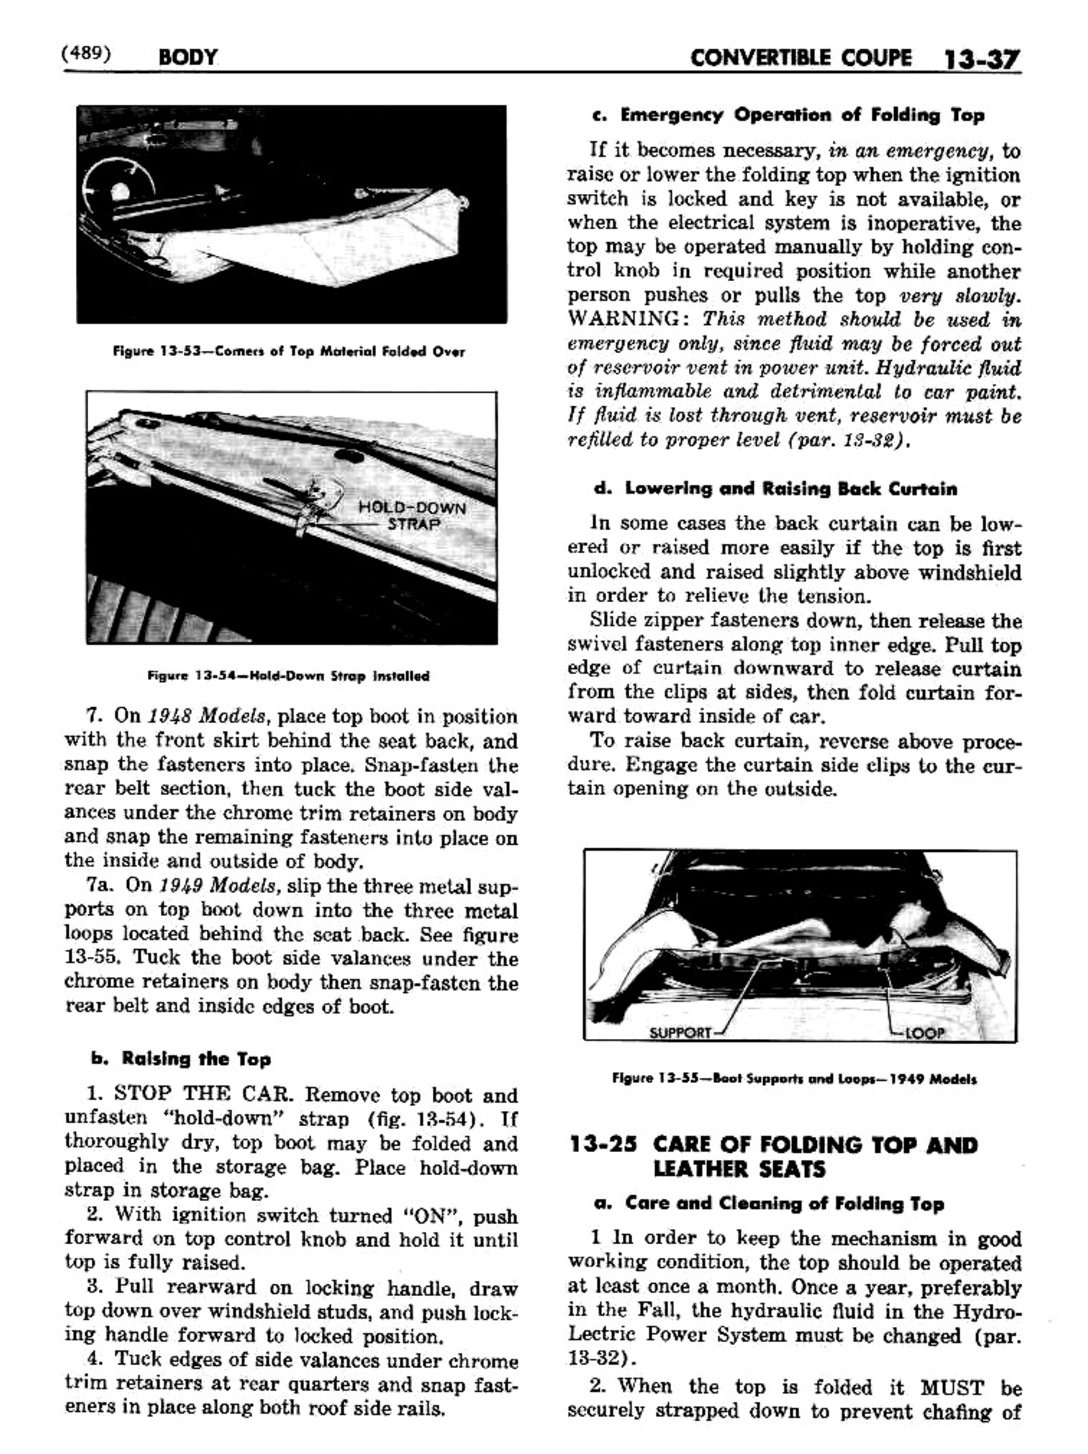 n_14 1948 Buick Shop Manual - Body-037-037.jpg